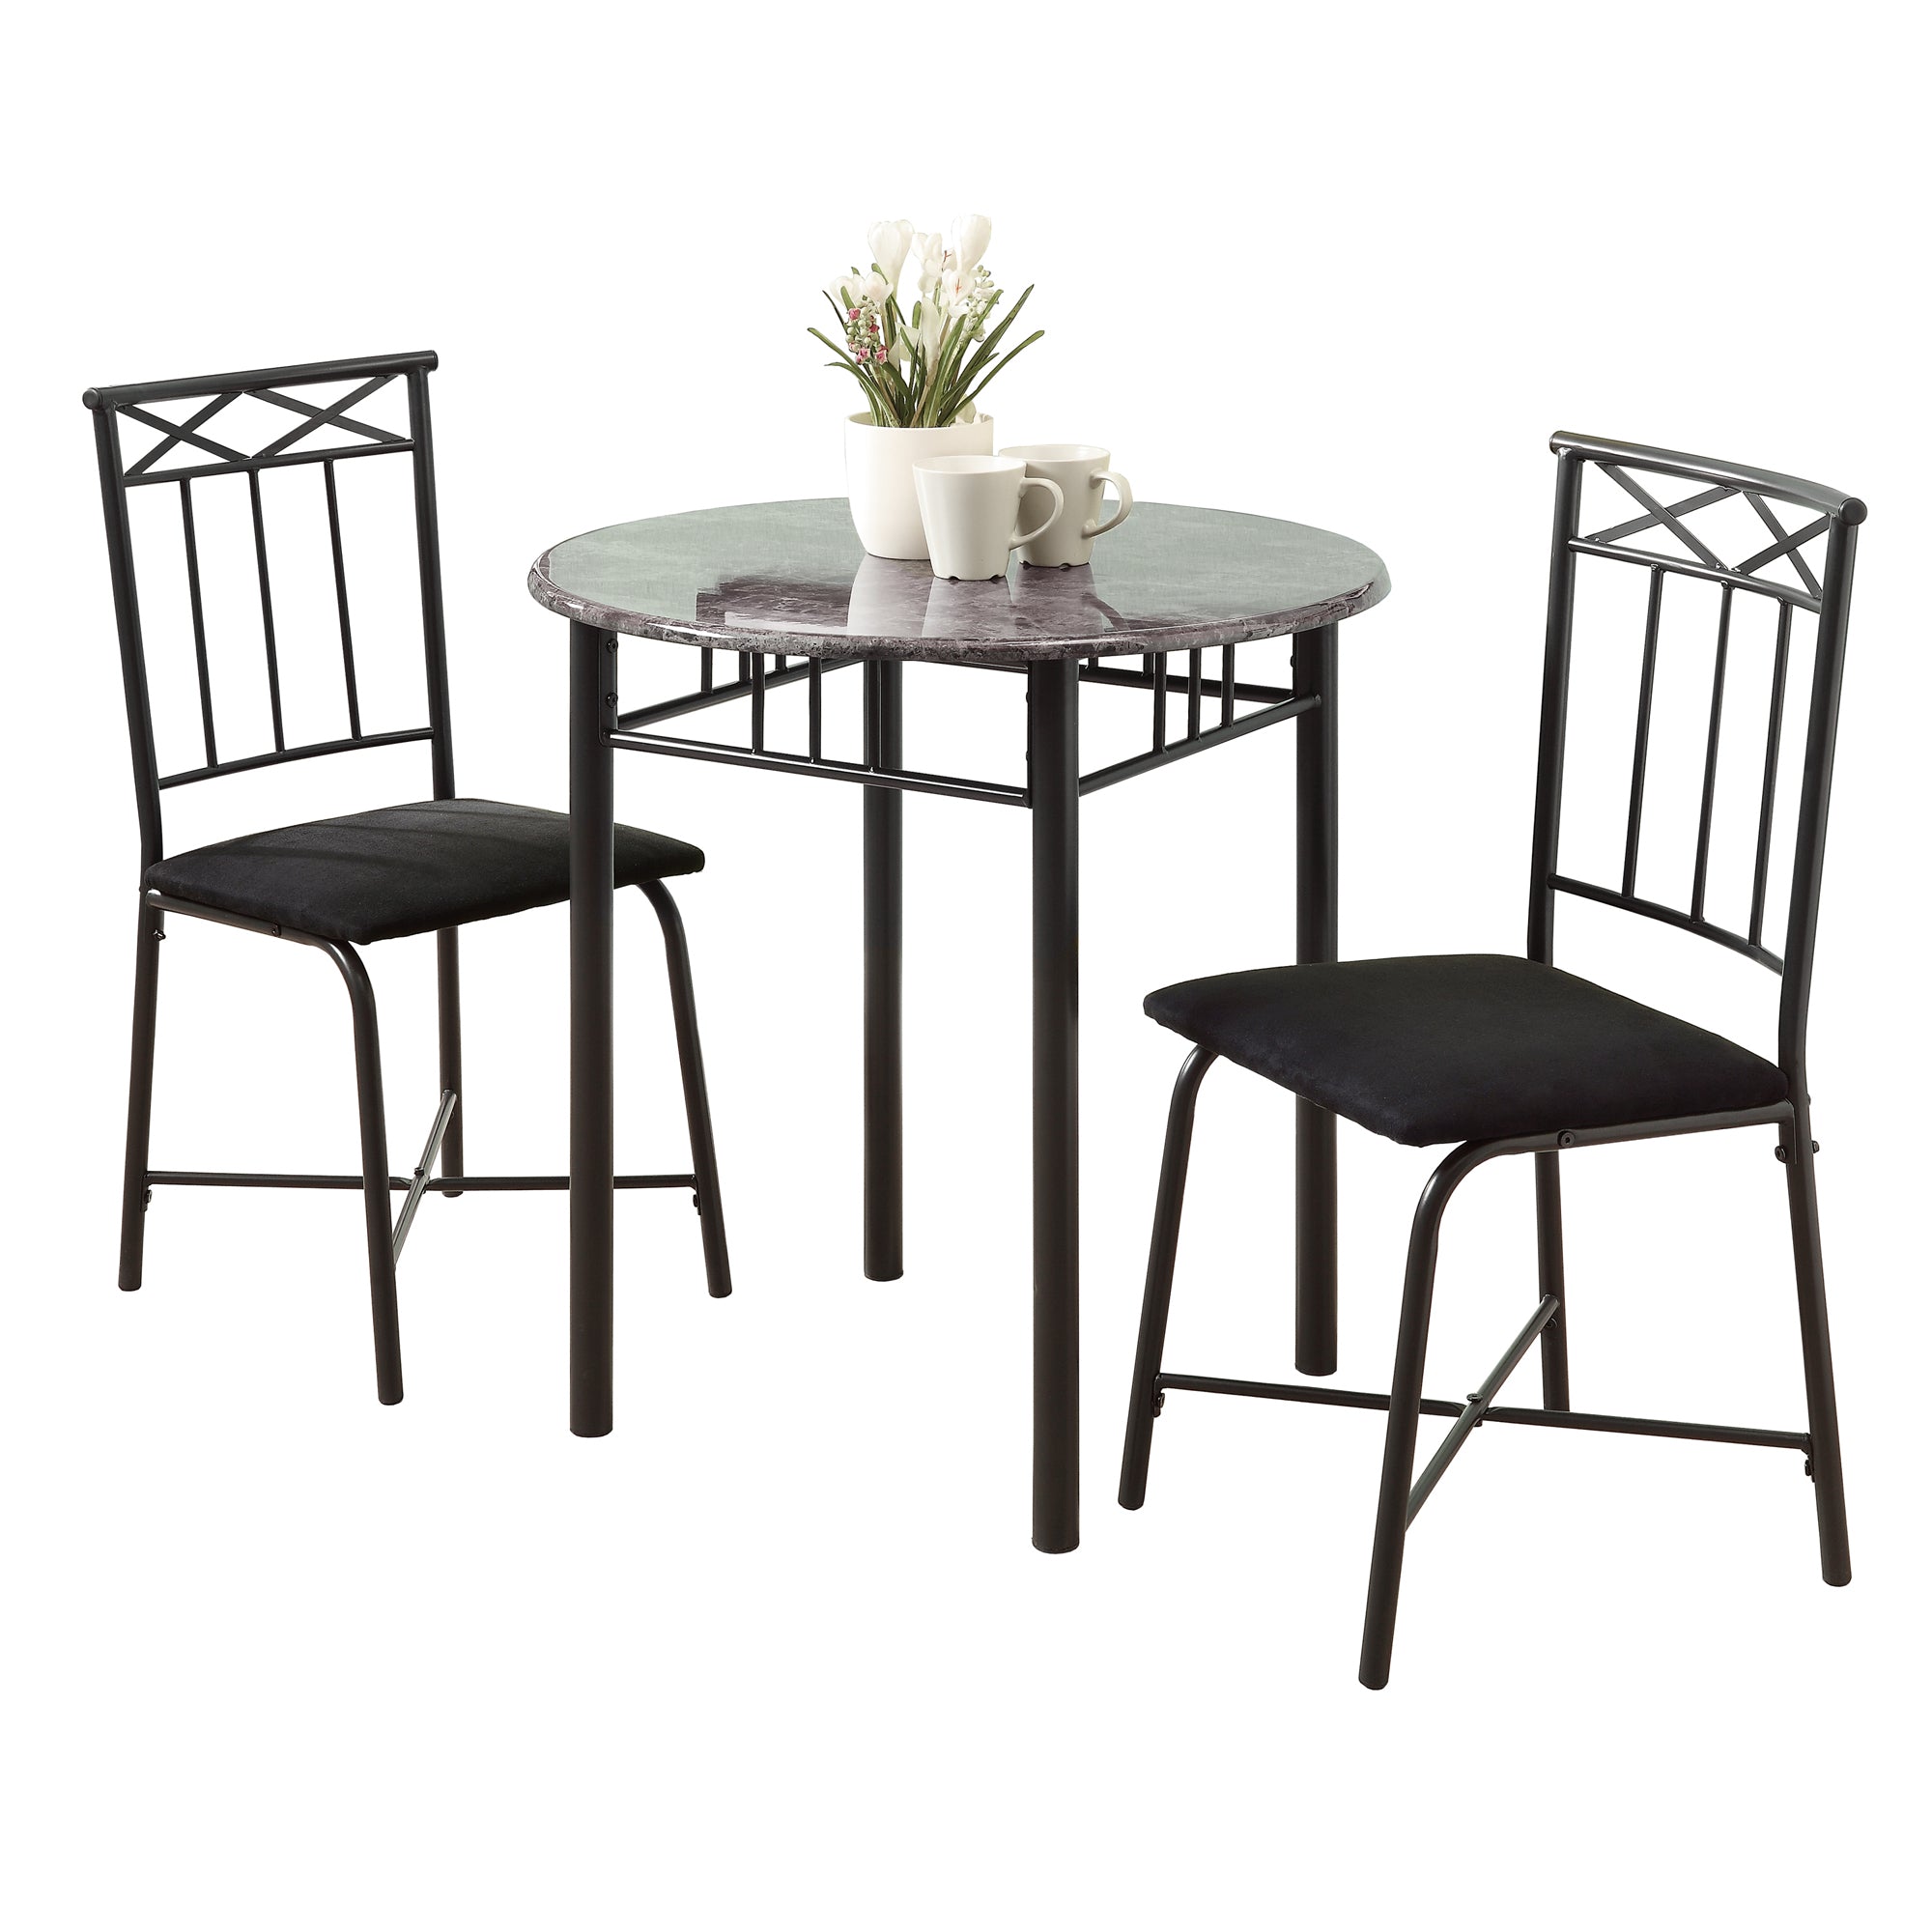 Bann Modern Home Sturdy Round Dining Table 3 Pcs Set (Grey)